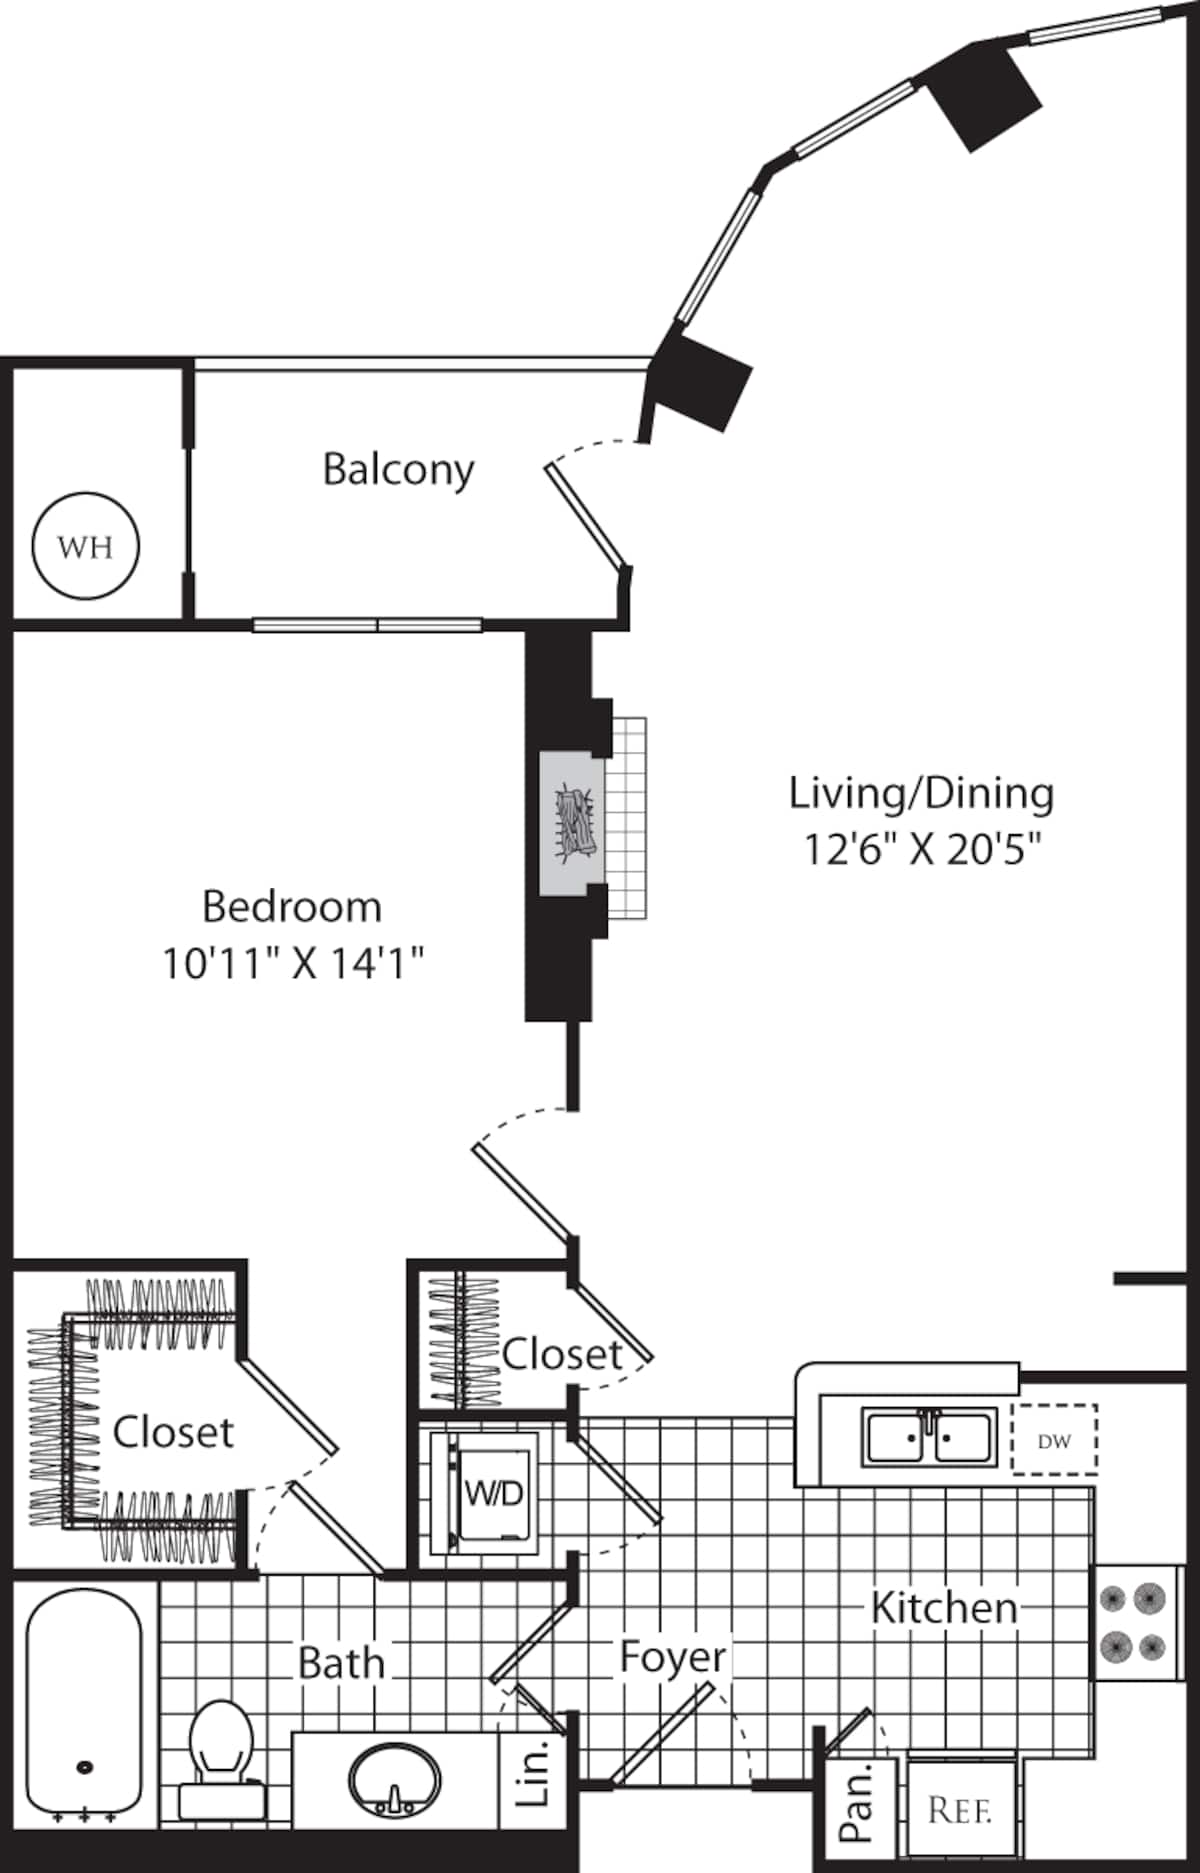 Floorplan diagram for B4 (Penthouse), showing 1 bedroom